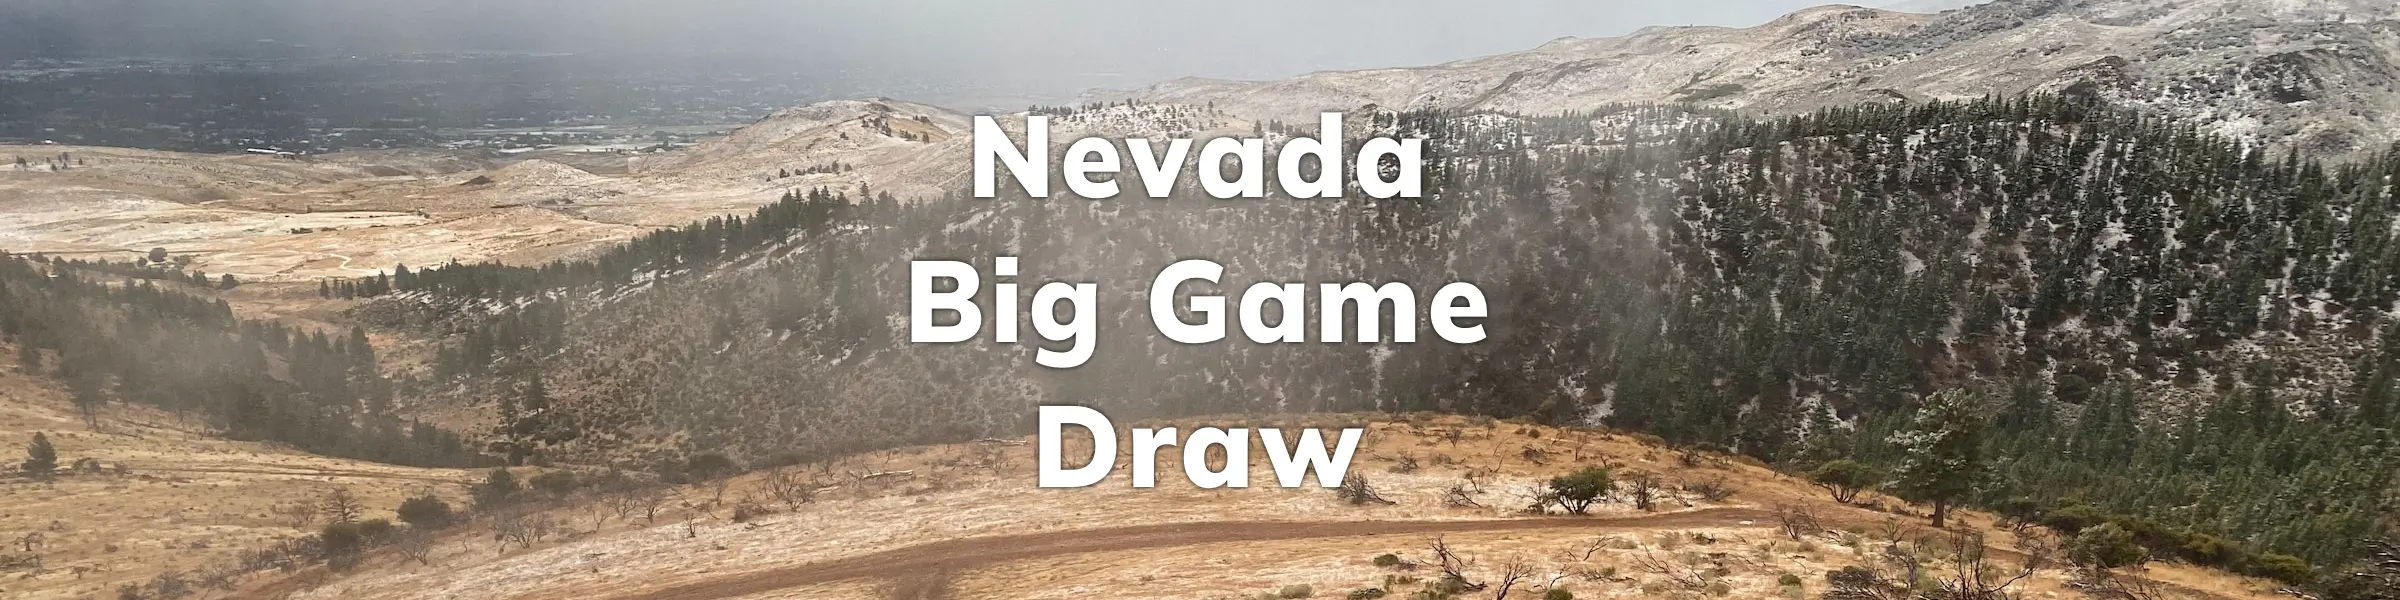 Nevada Big Game Draw